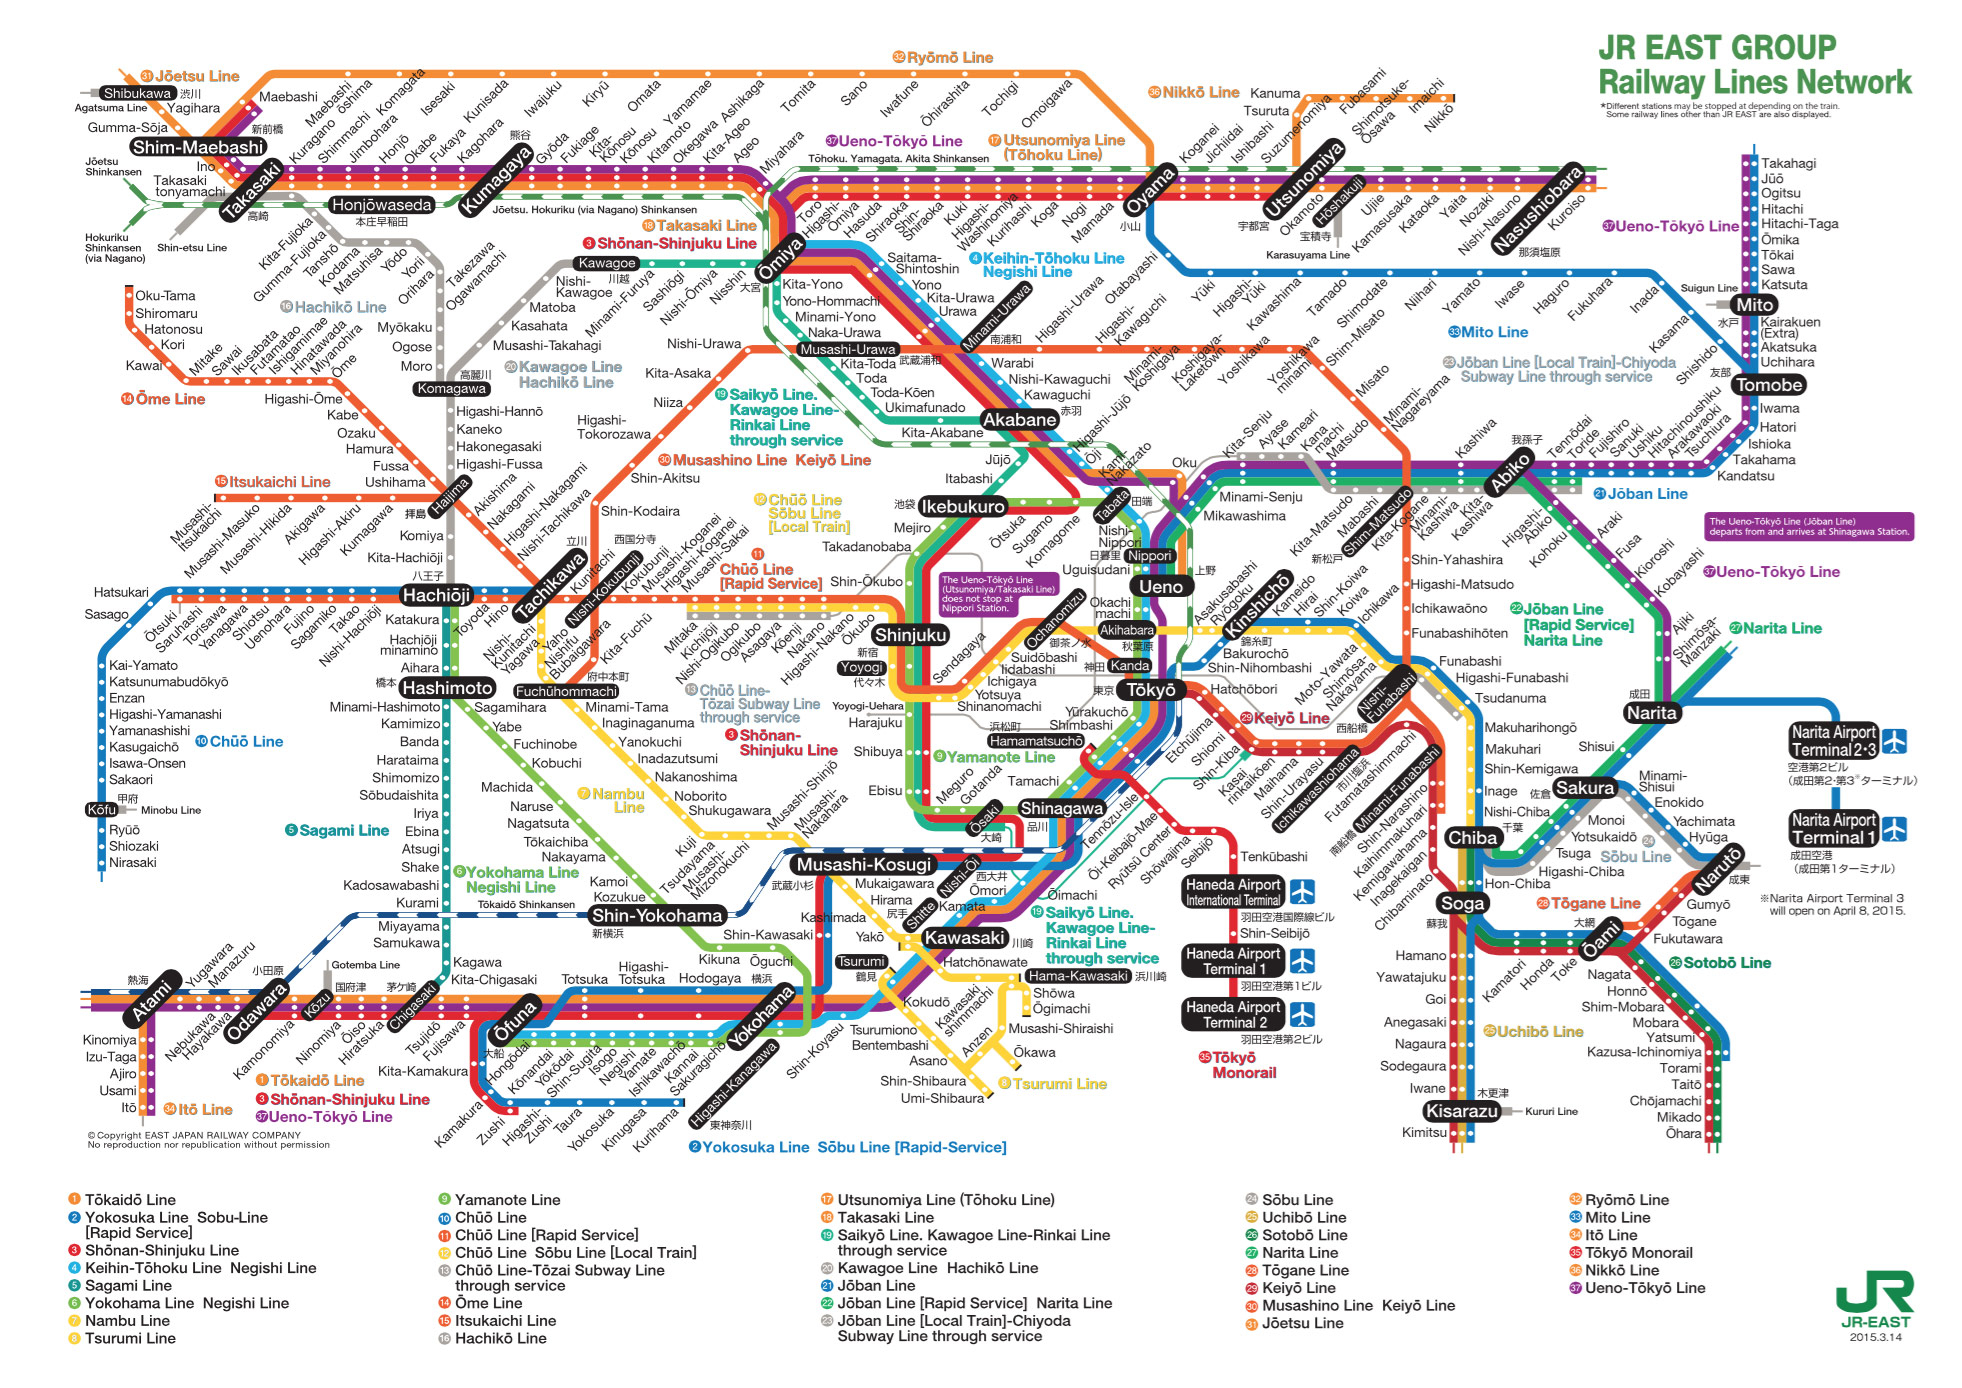 Tokyo Train And Subway Guide